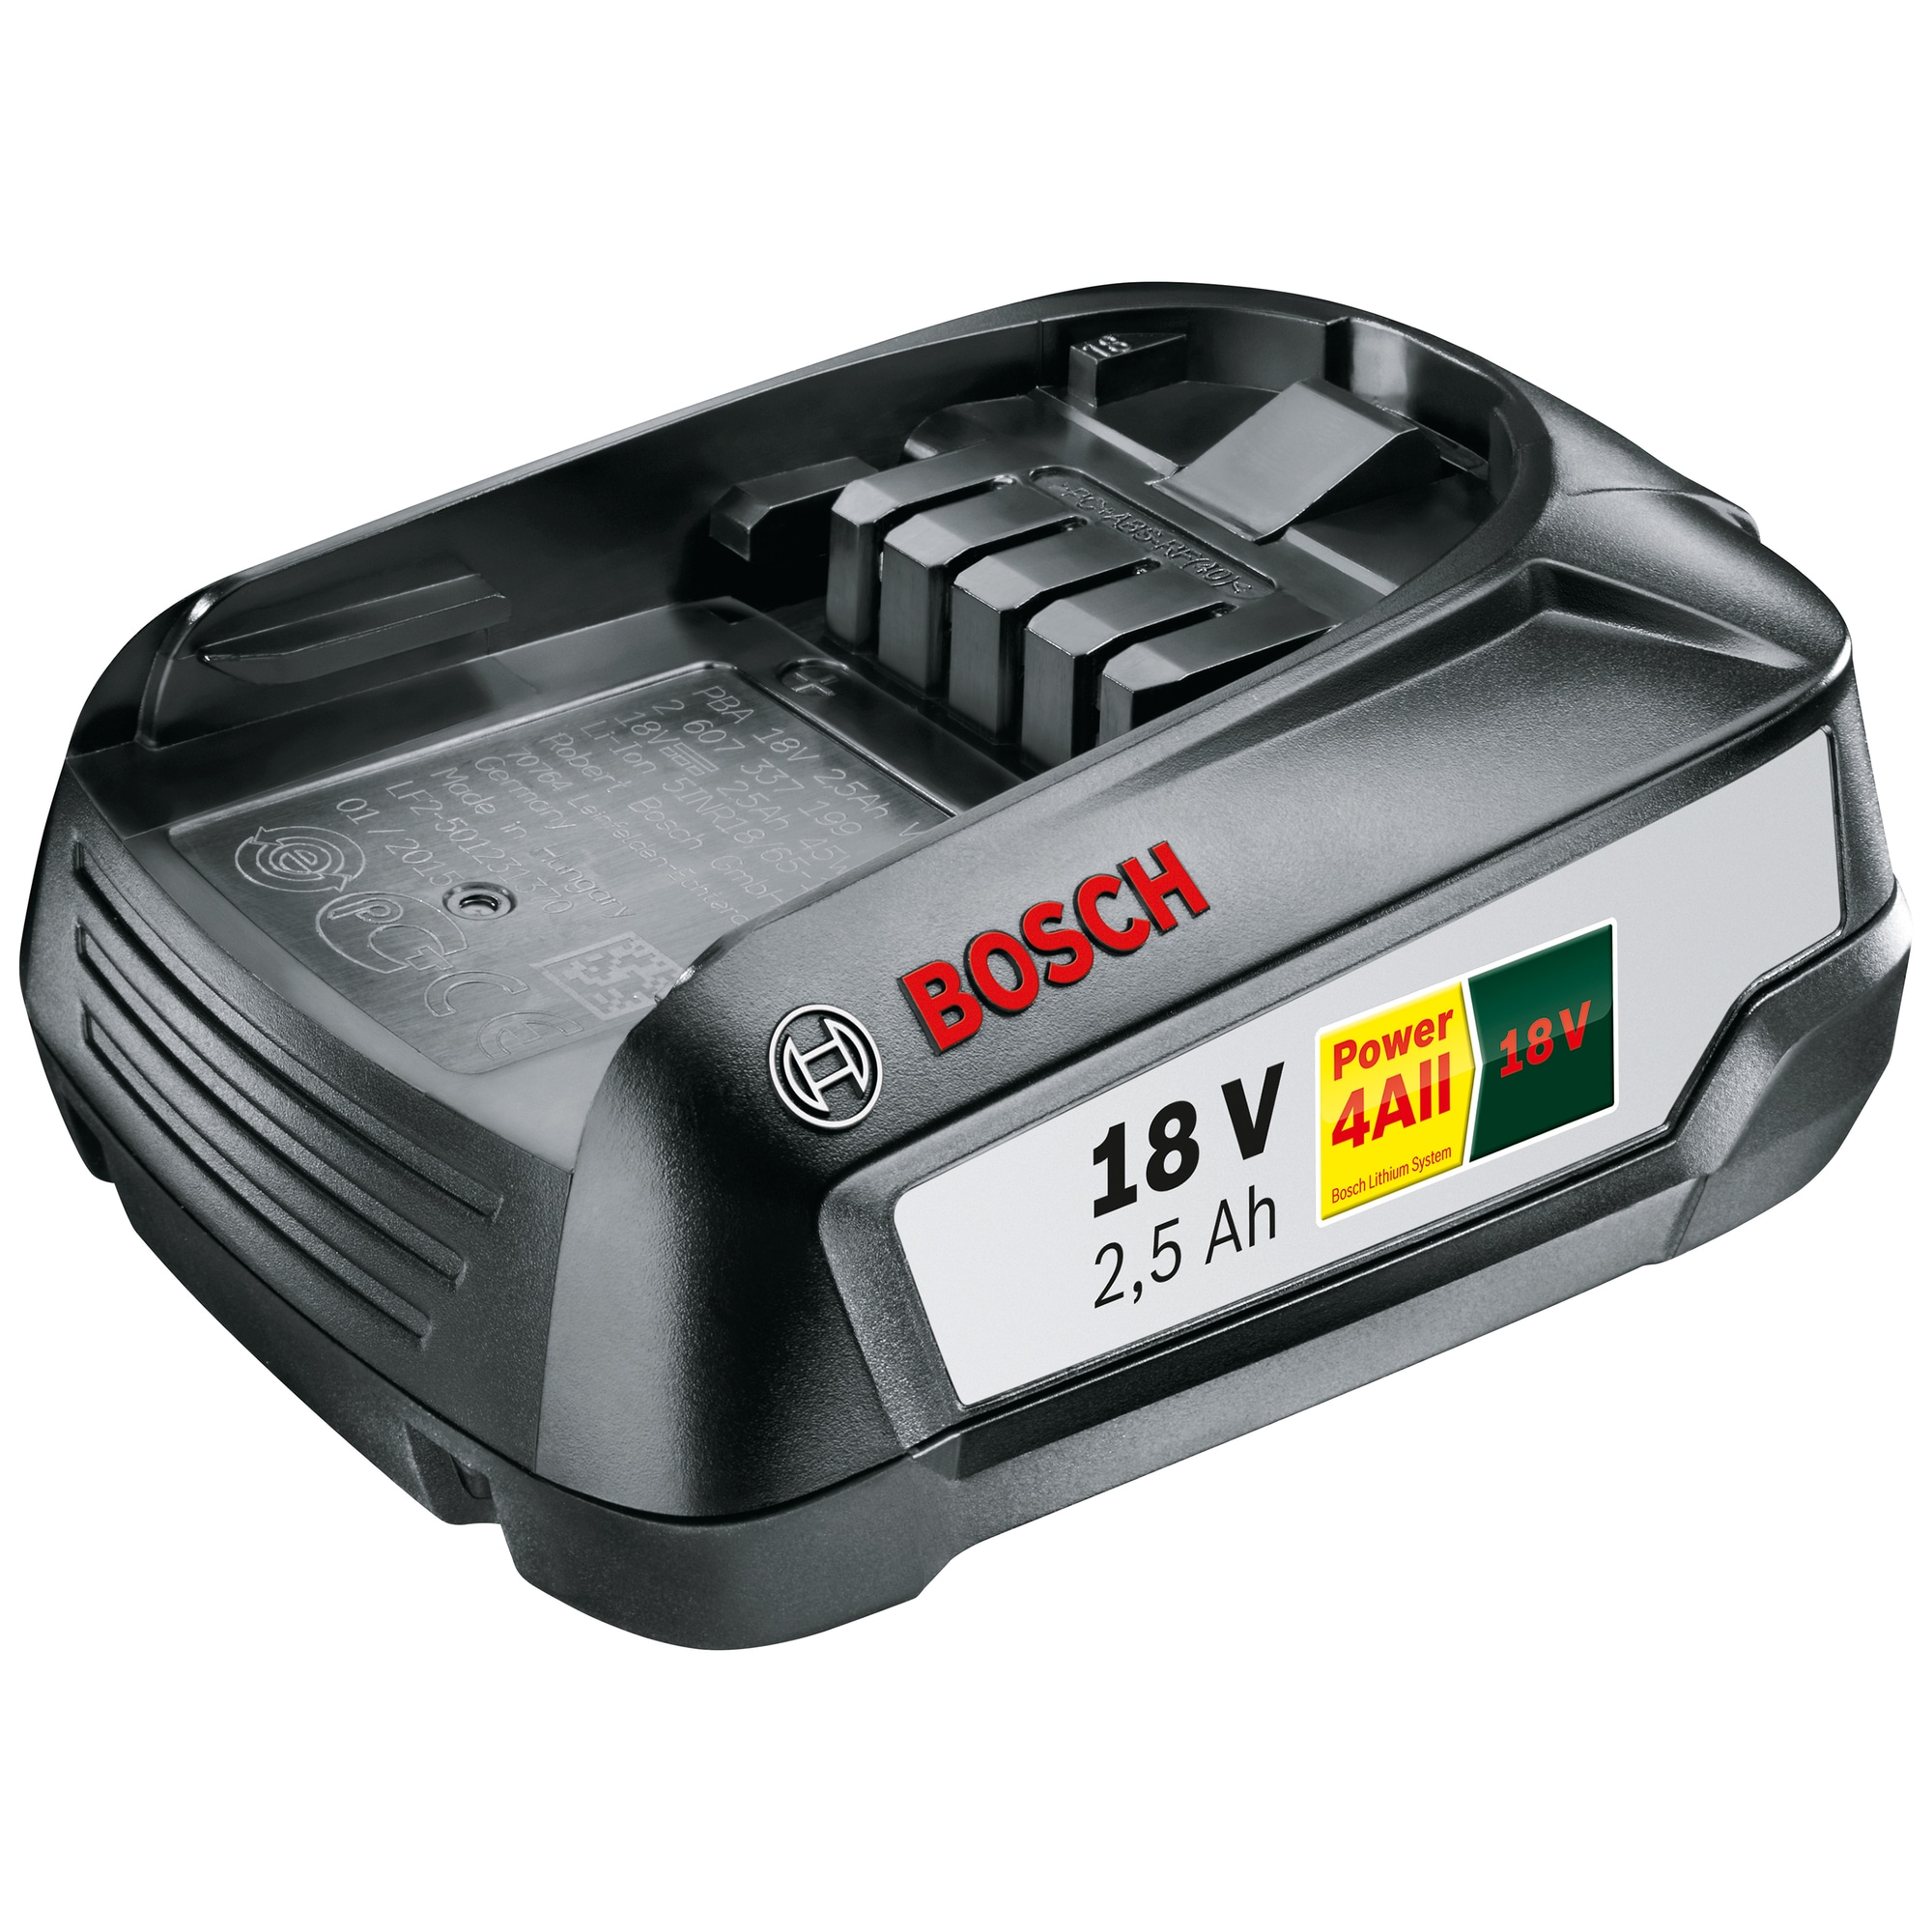 Bosch batteri PBA 18V 2,5Ah W-B 1600A005B0 | Elgiganten